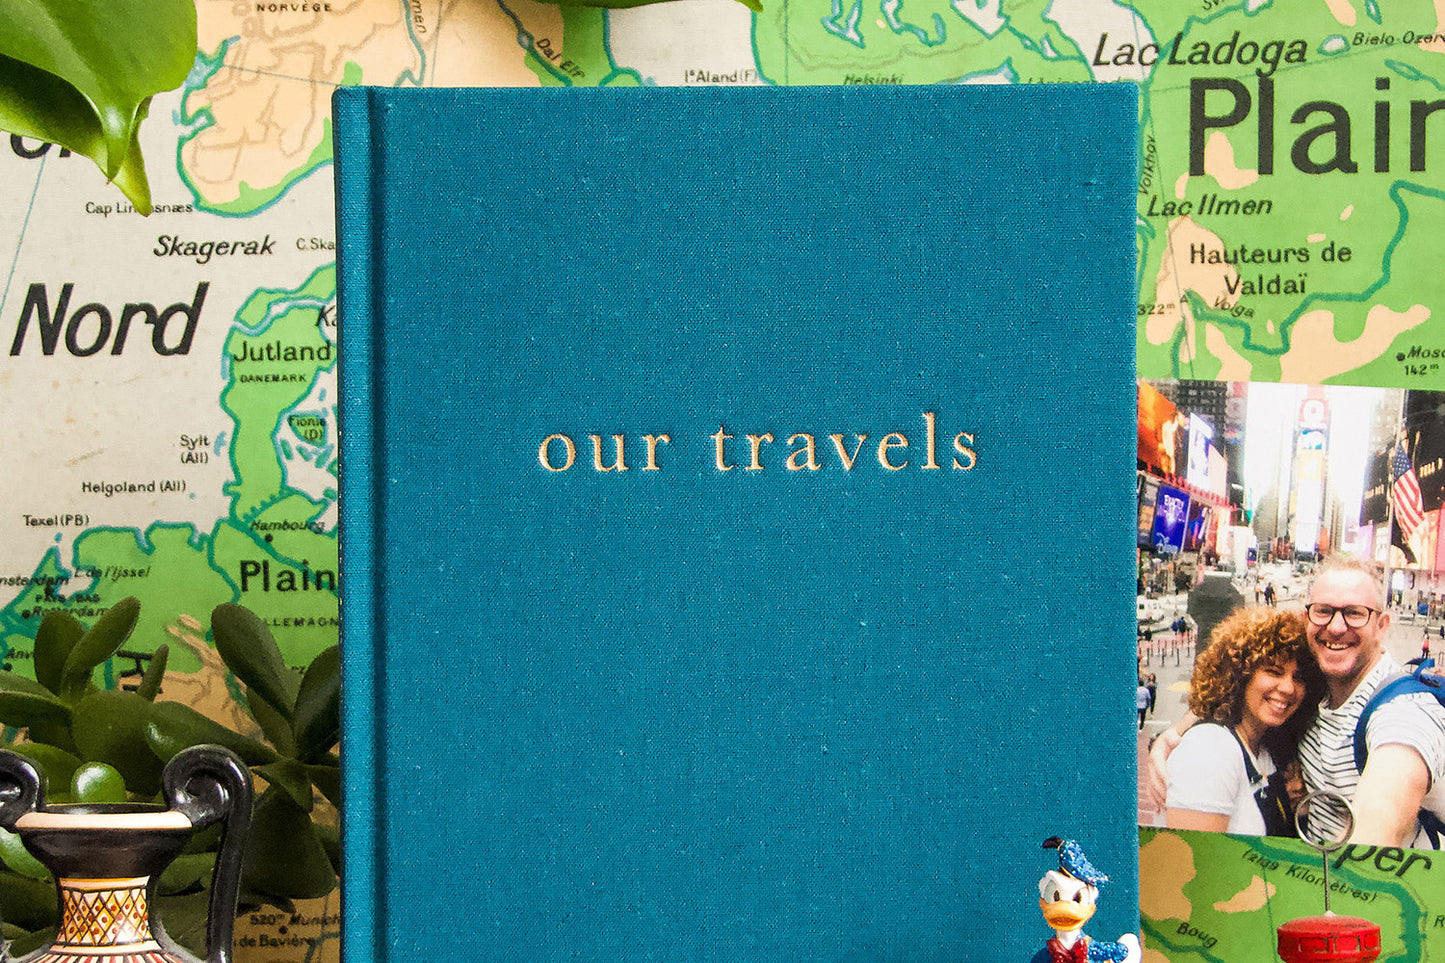 Write To Me Journal - Our Travels | Flywheel | Stationery | Tasmania